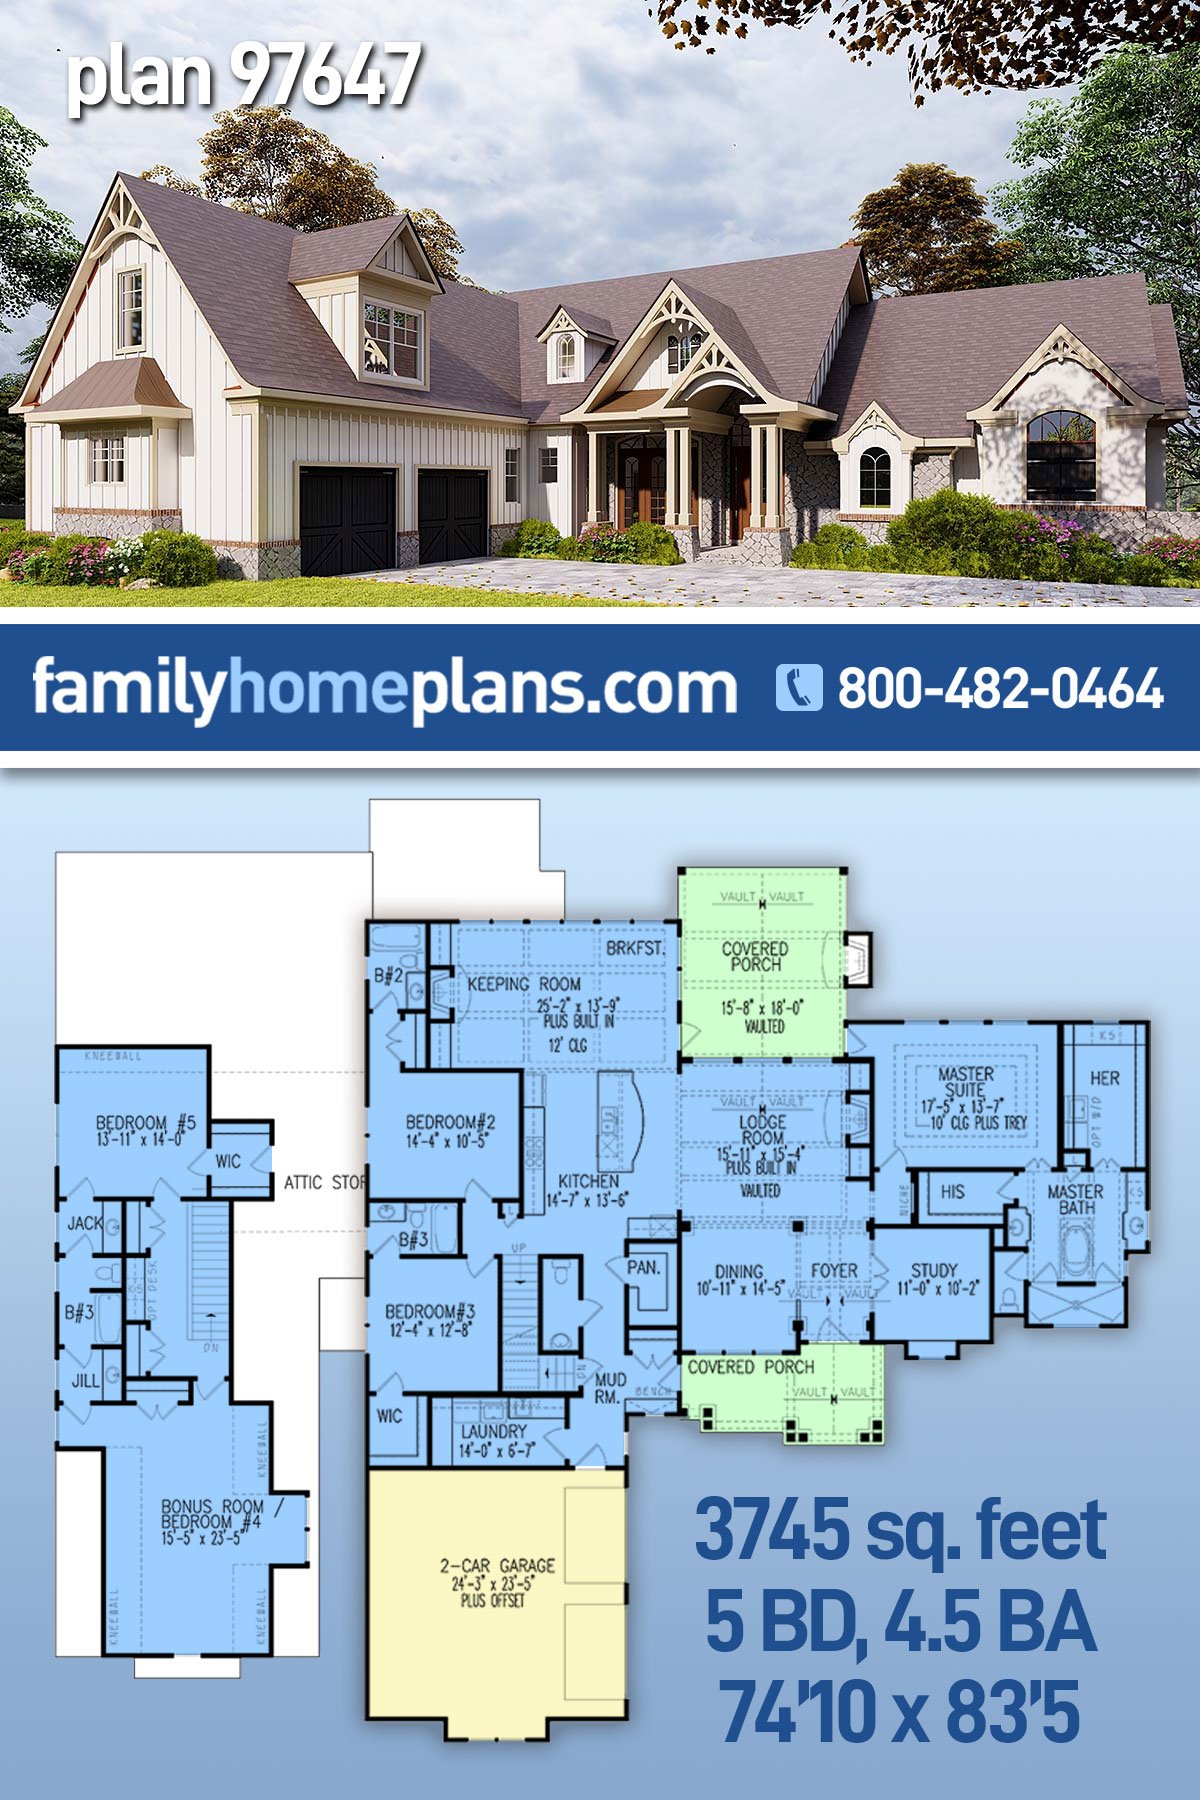 House Plan 97647